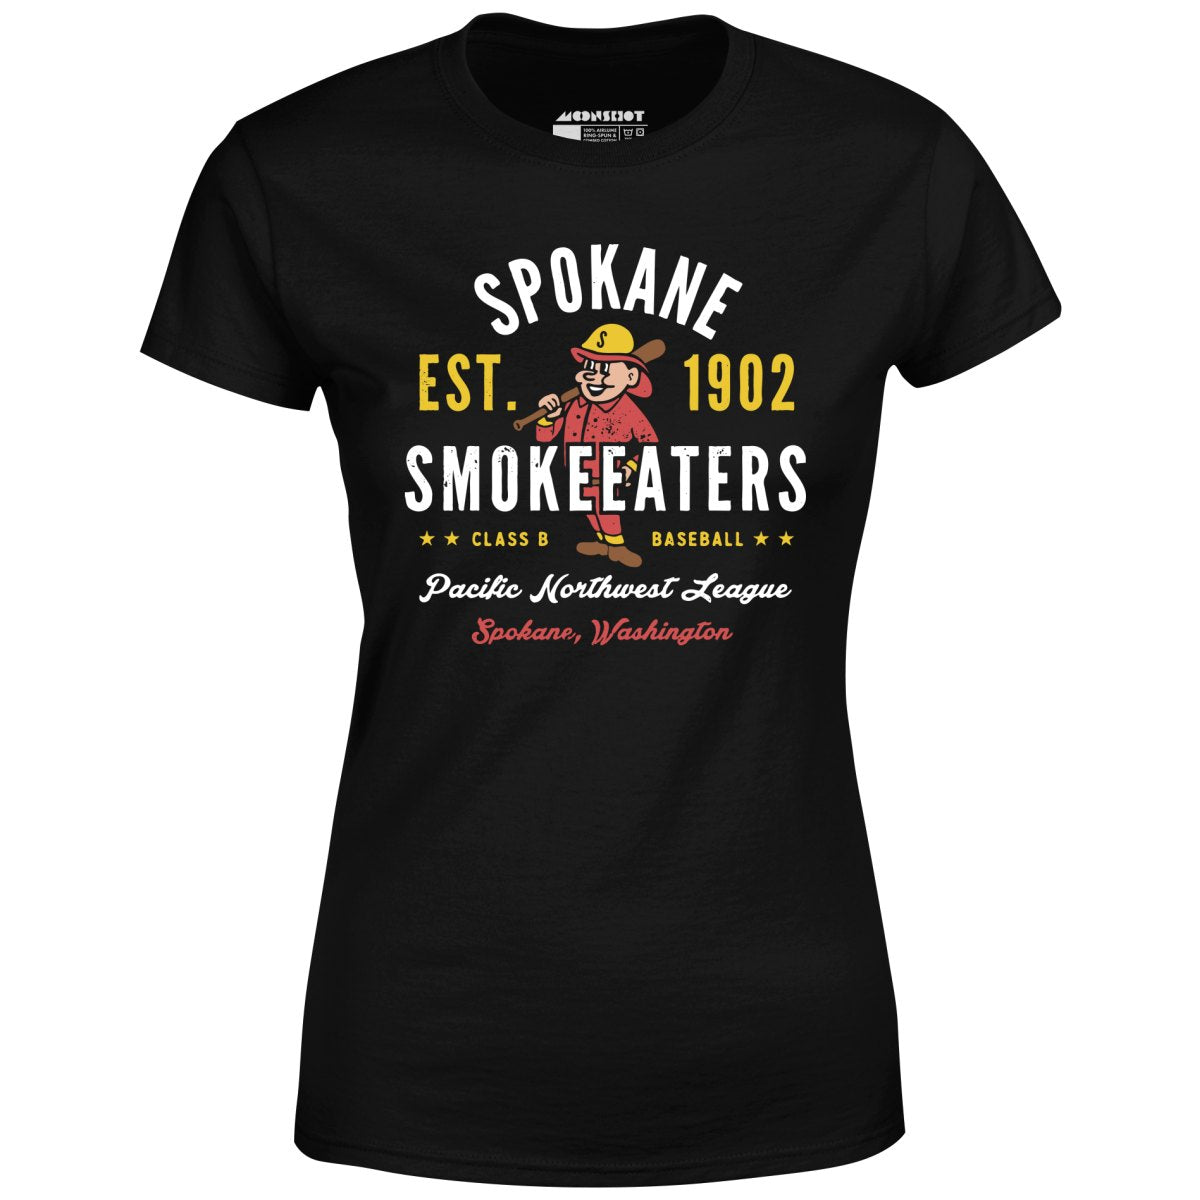 Spokane Smoke Eaters - Washington - Vintage Defunct Baseball Teams - Women's T-Shirt